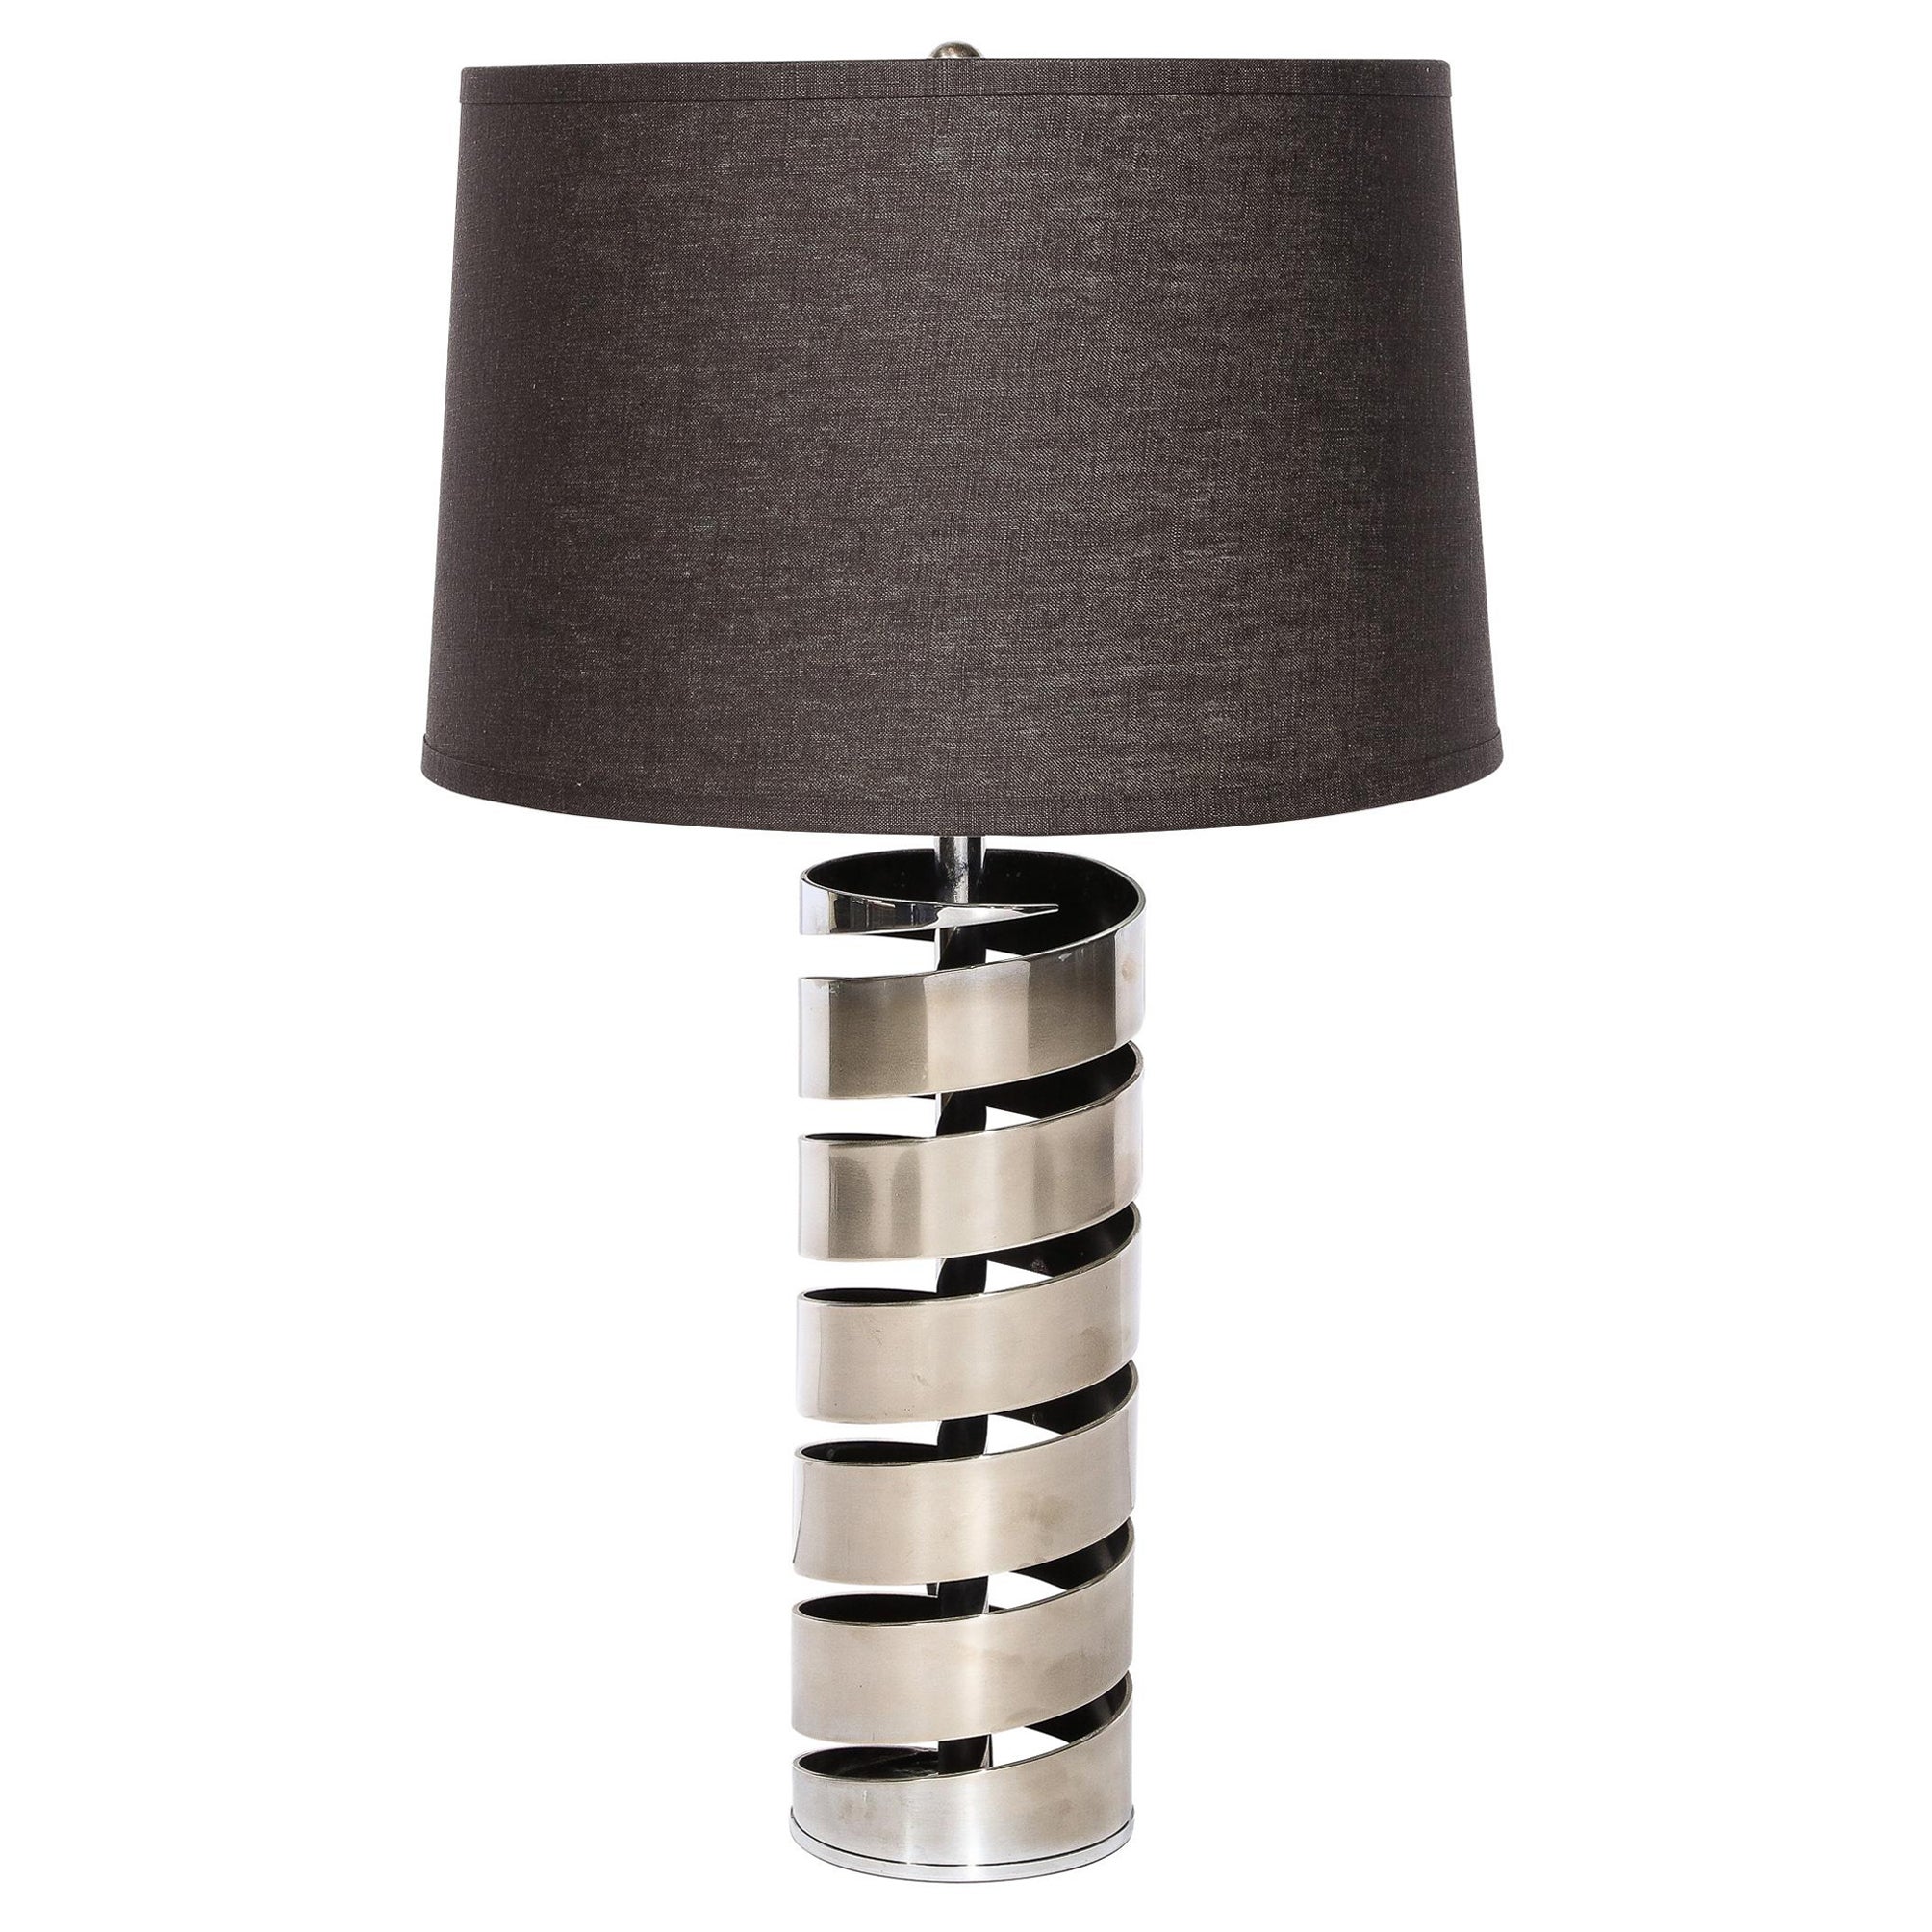 Modernist Torqued Spiral Form Table Lamp in Satin Nickel